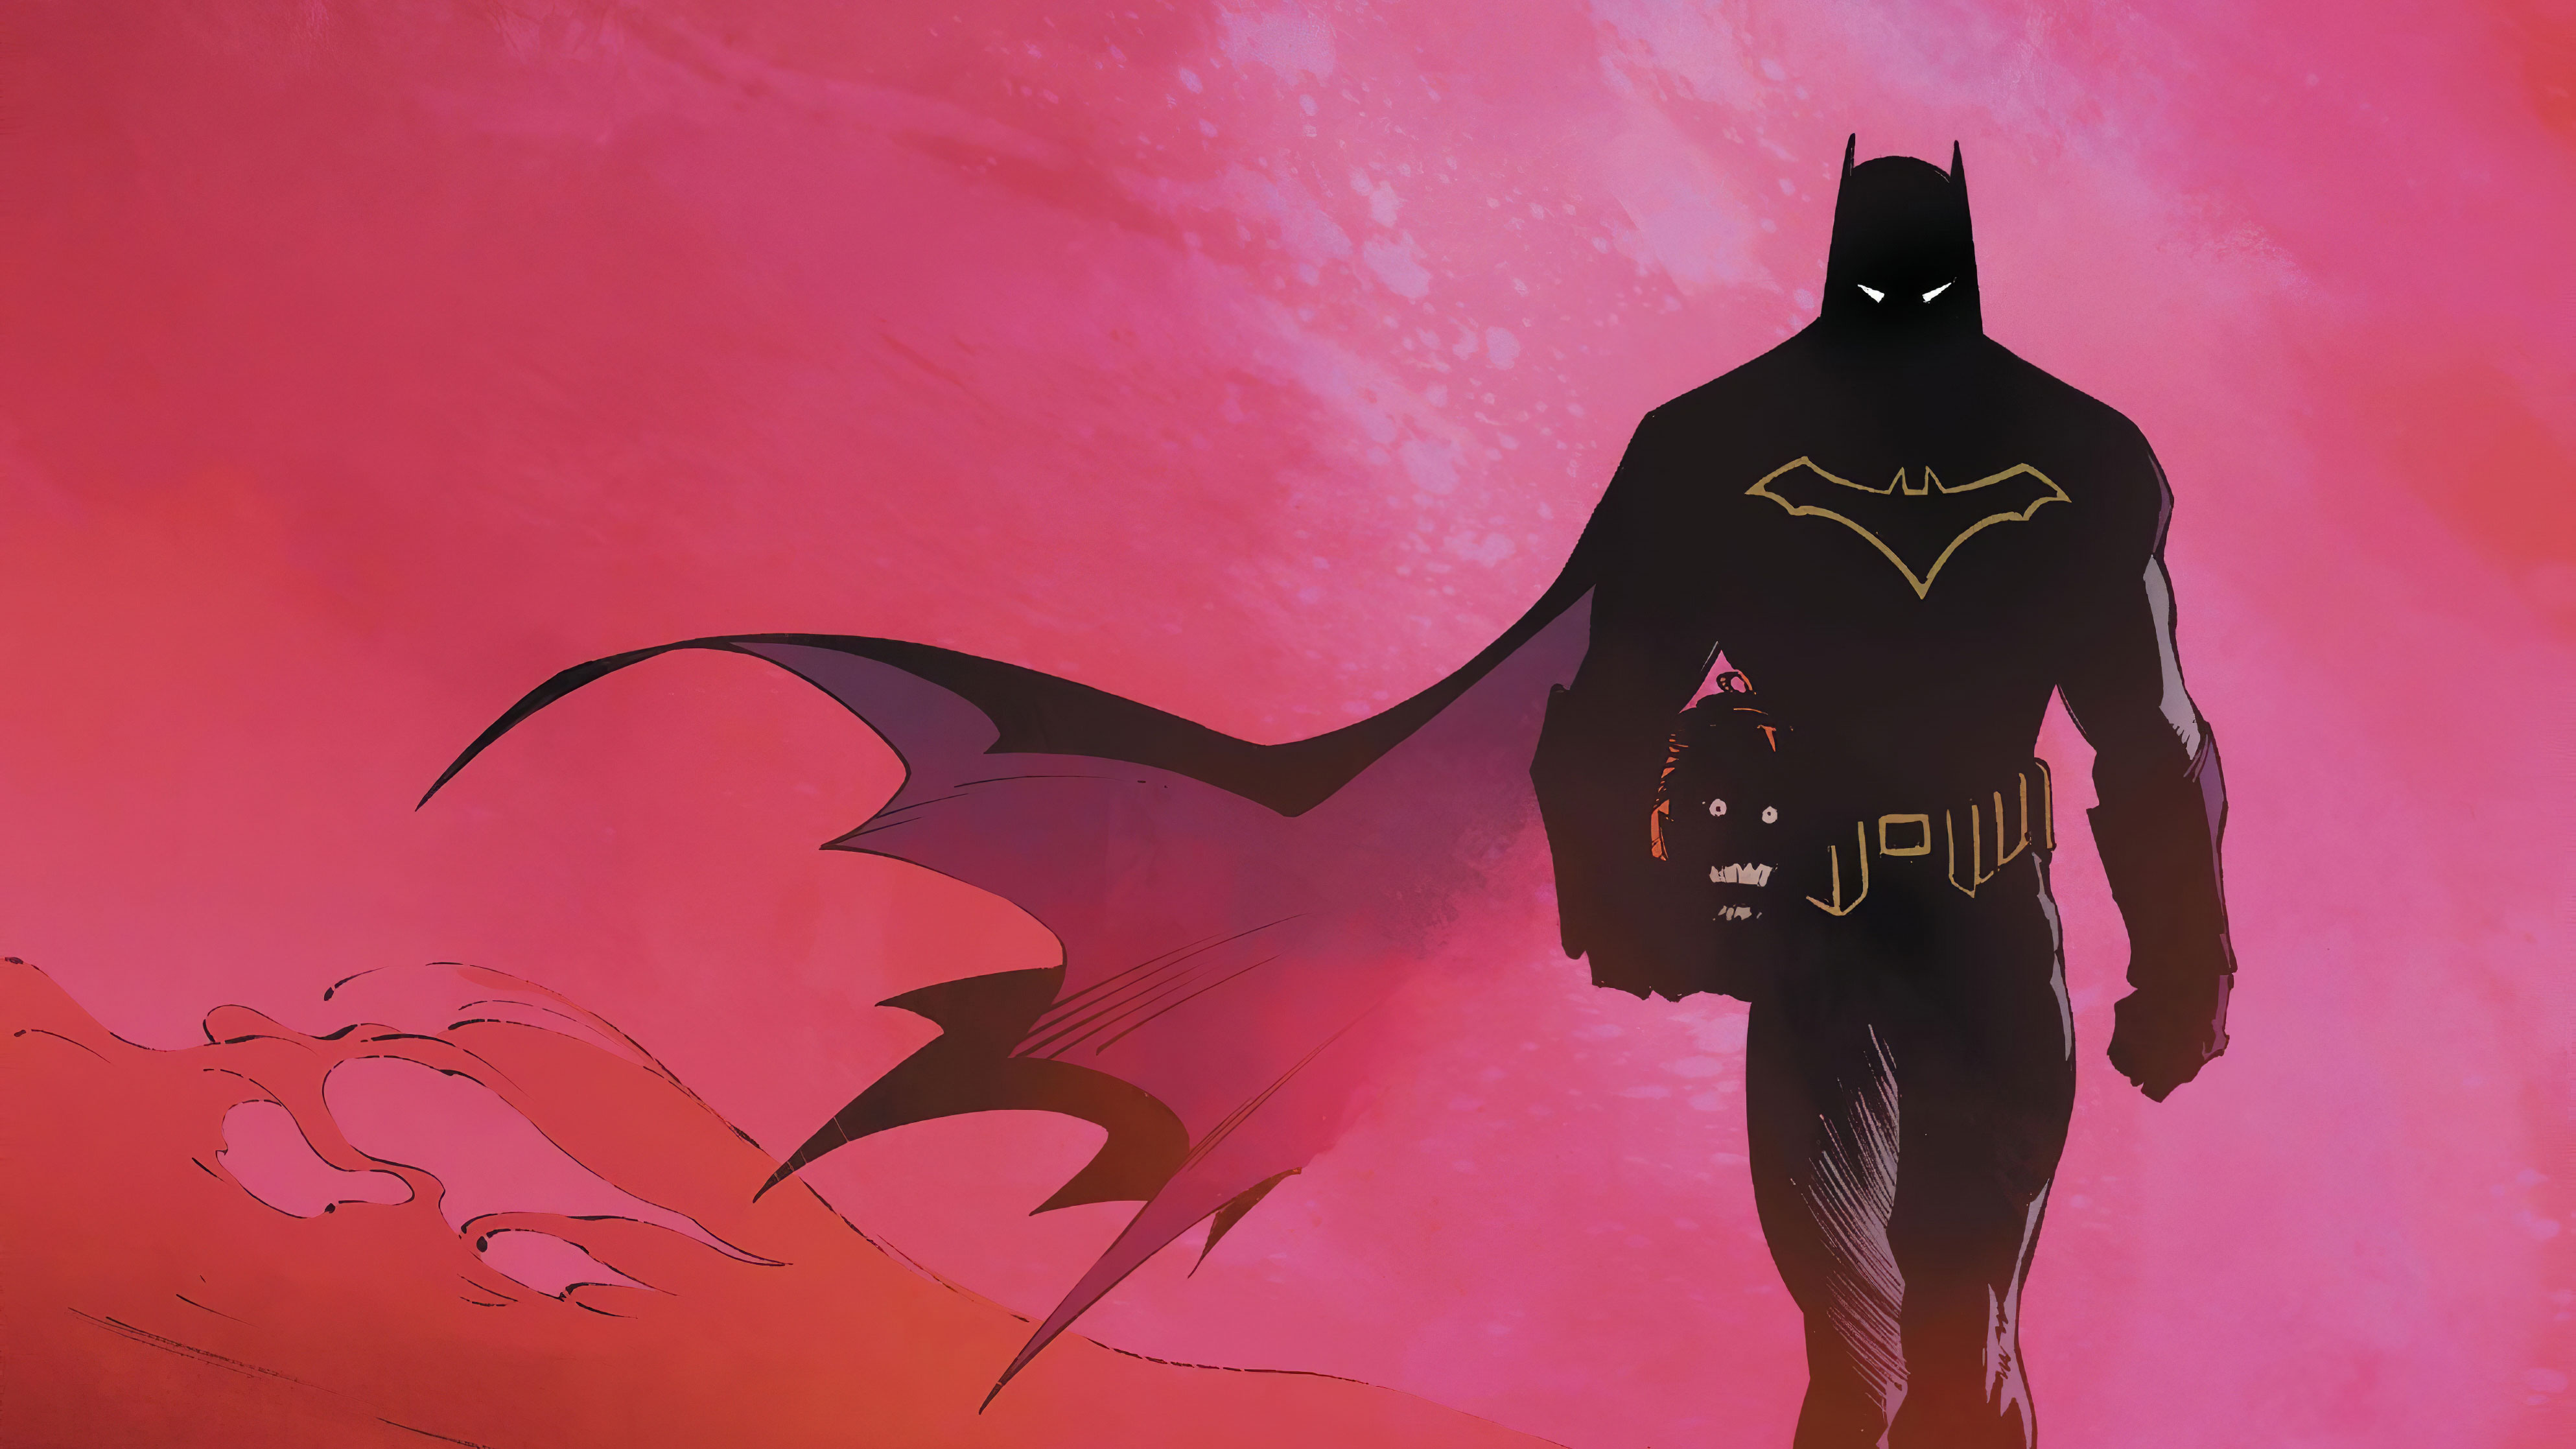 Download Cool Batman Cartoon Pink Art Mobile Wallpaper